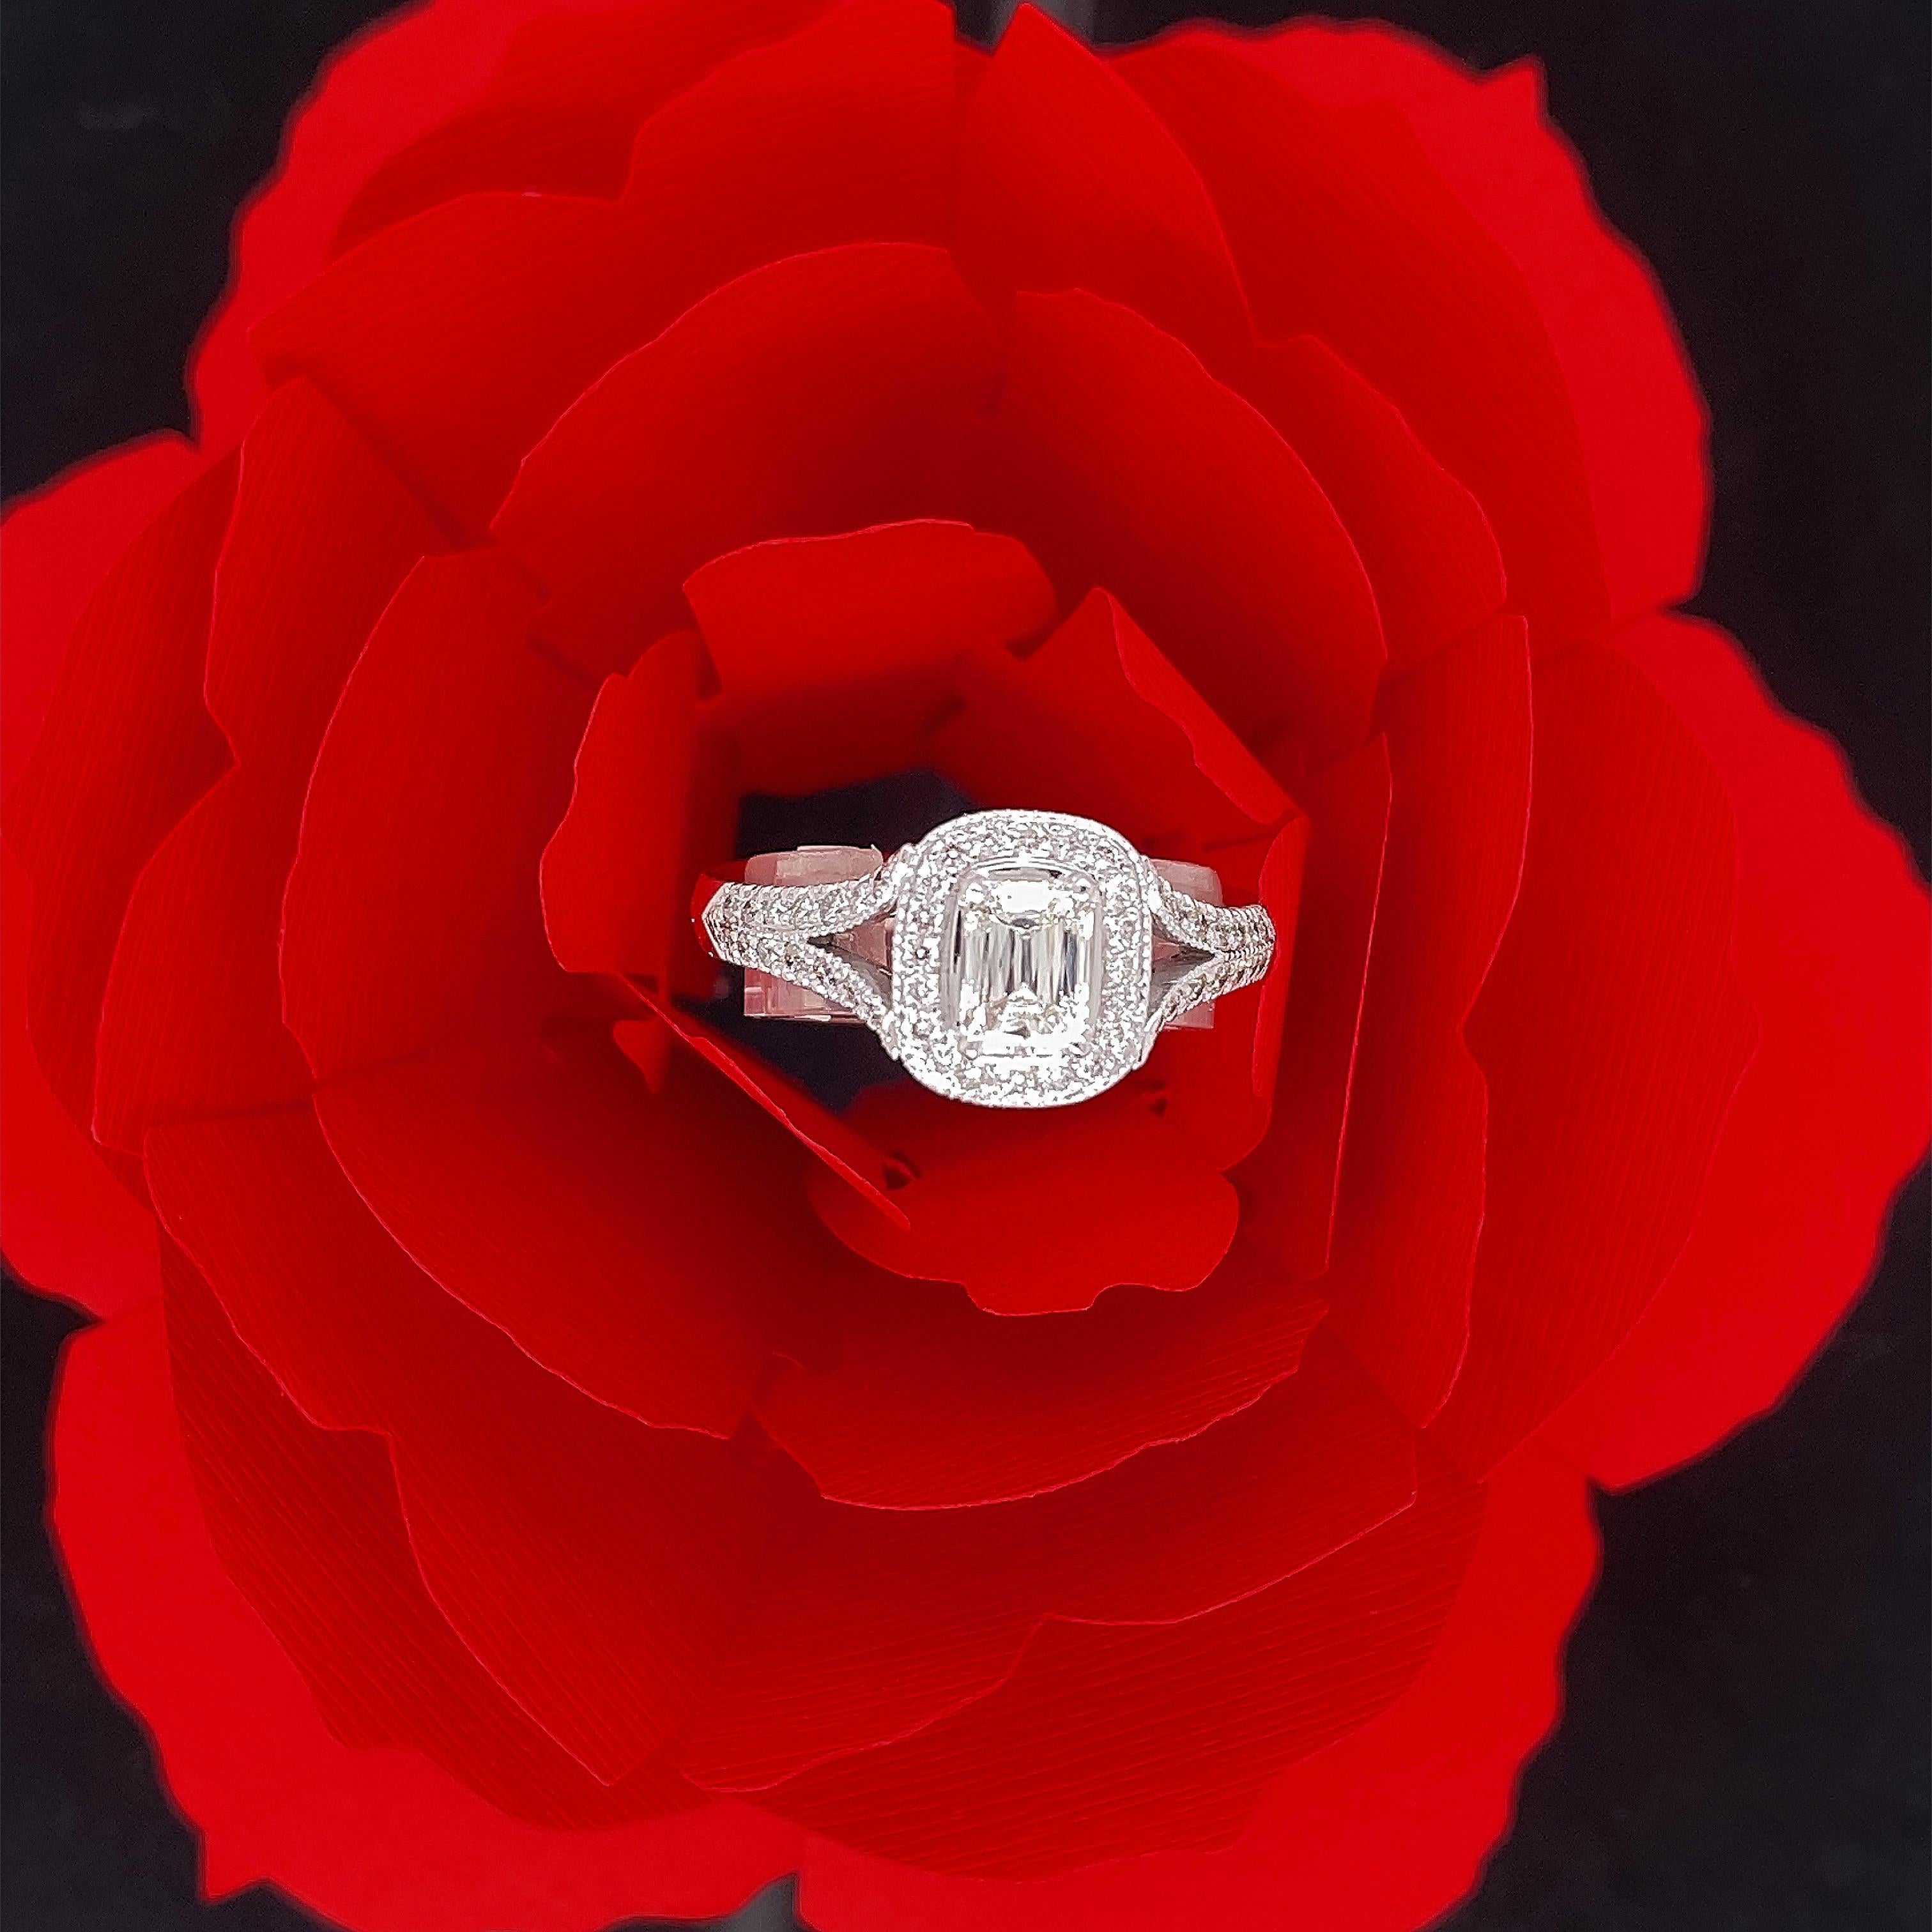 Christopher Designs CRISSCUT Diamond L'Amour Split Shank Halo Engagement Ring
Style:  Halo Split Shank 
Style Number:  L165-085
Metal:  18kt White Gold
Size:  6.5 sizable
TCW:  1.00 tcw
Main Diamond:  Crisscut Diamond ( Emerald Cut ) 0.50 cts
Color